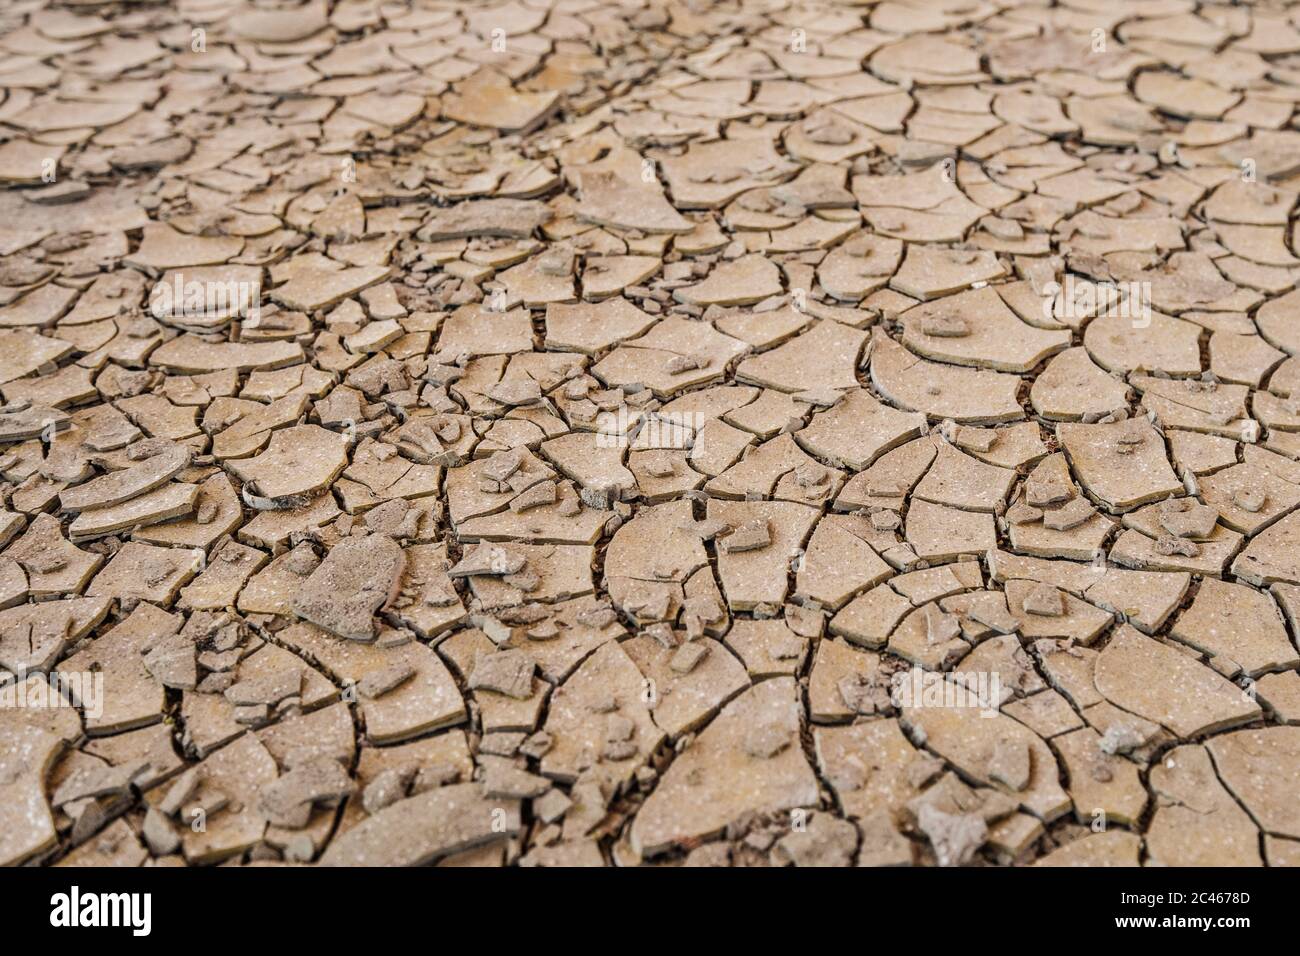 Dry desert soil ground sand cracked texture pattern Stock Photo